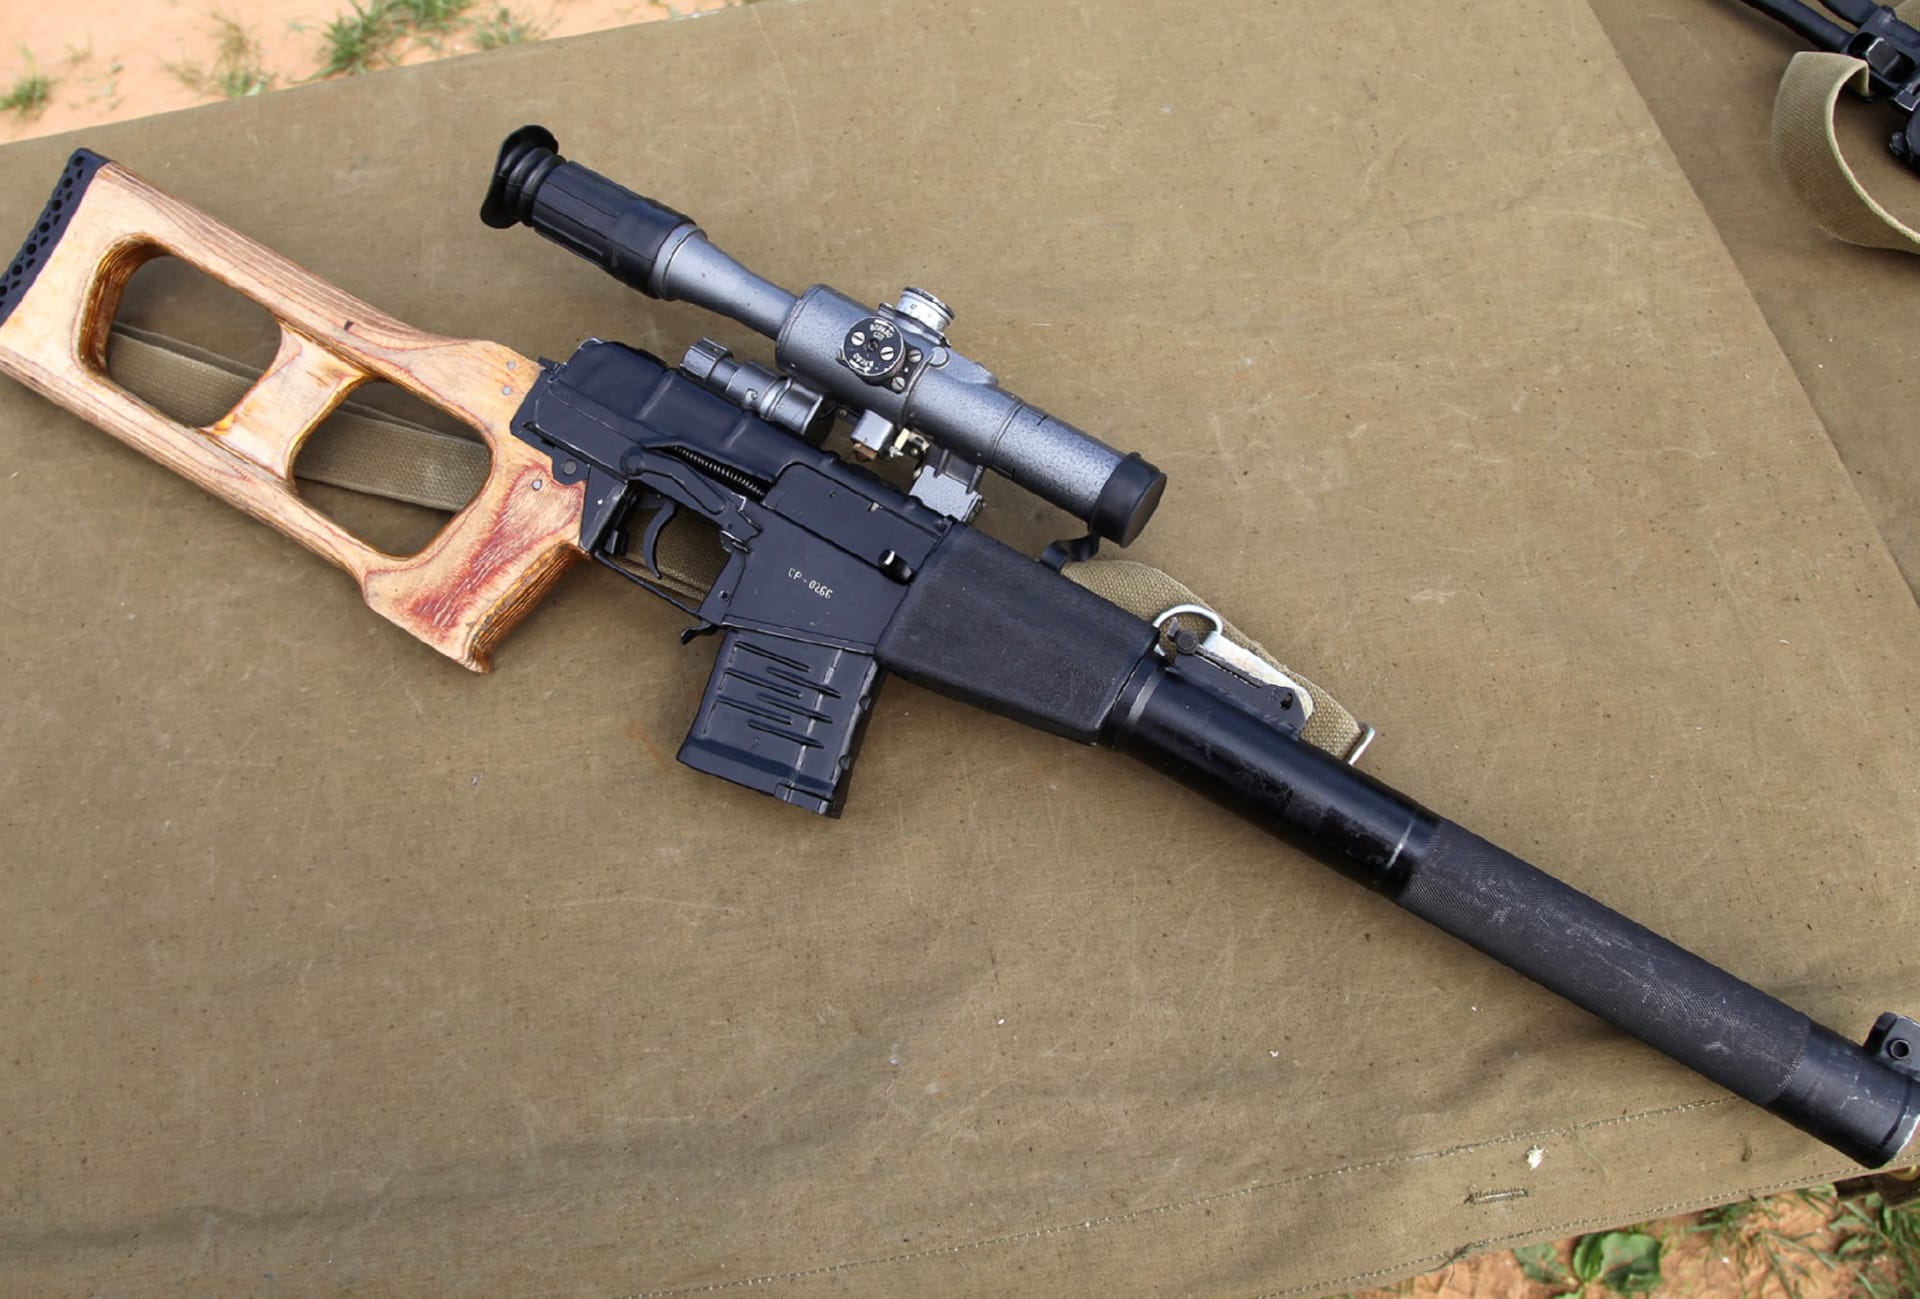 VSS Vintorez sniper rifle at 1600 x 1200 size wallpapers HD quality